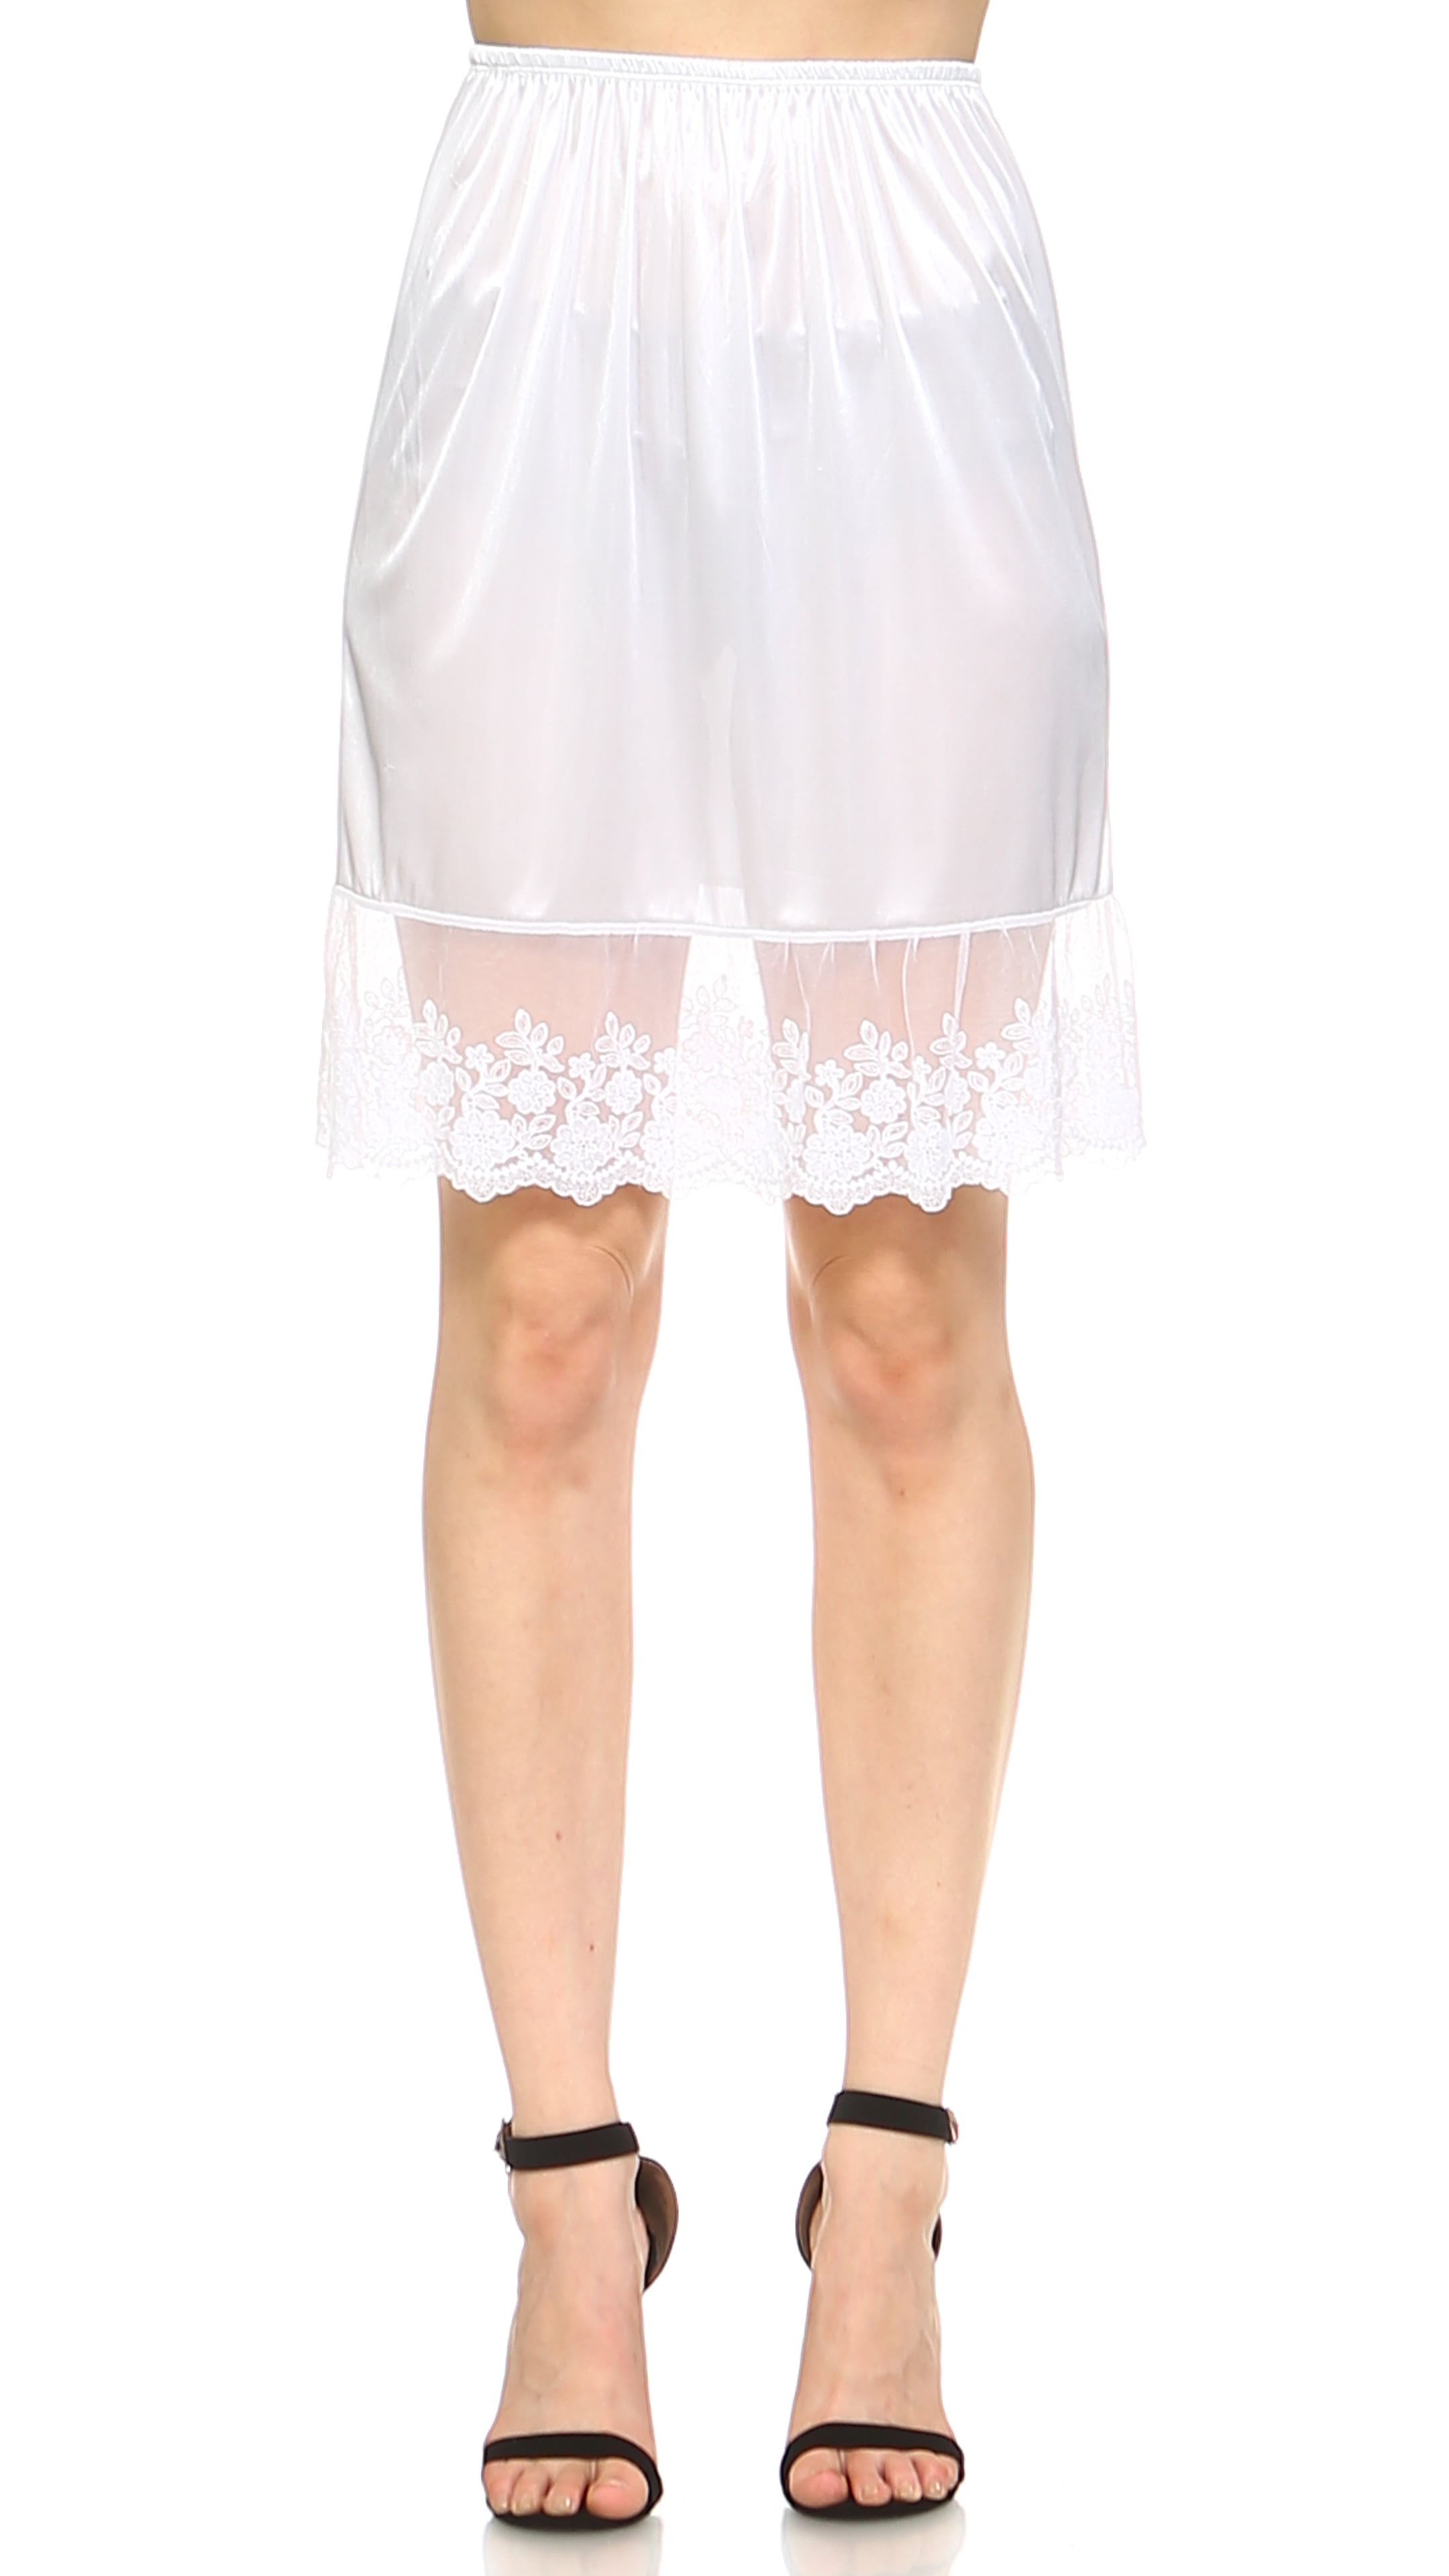 H1 Lace Slip Dress Extender HALF SLIP style 1 Size S-3XL, Knee